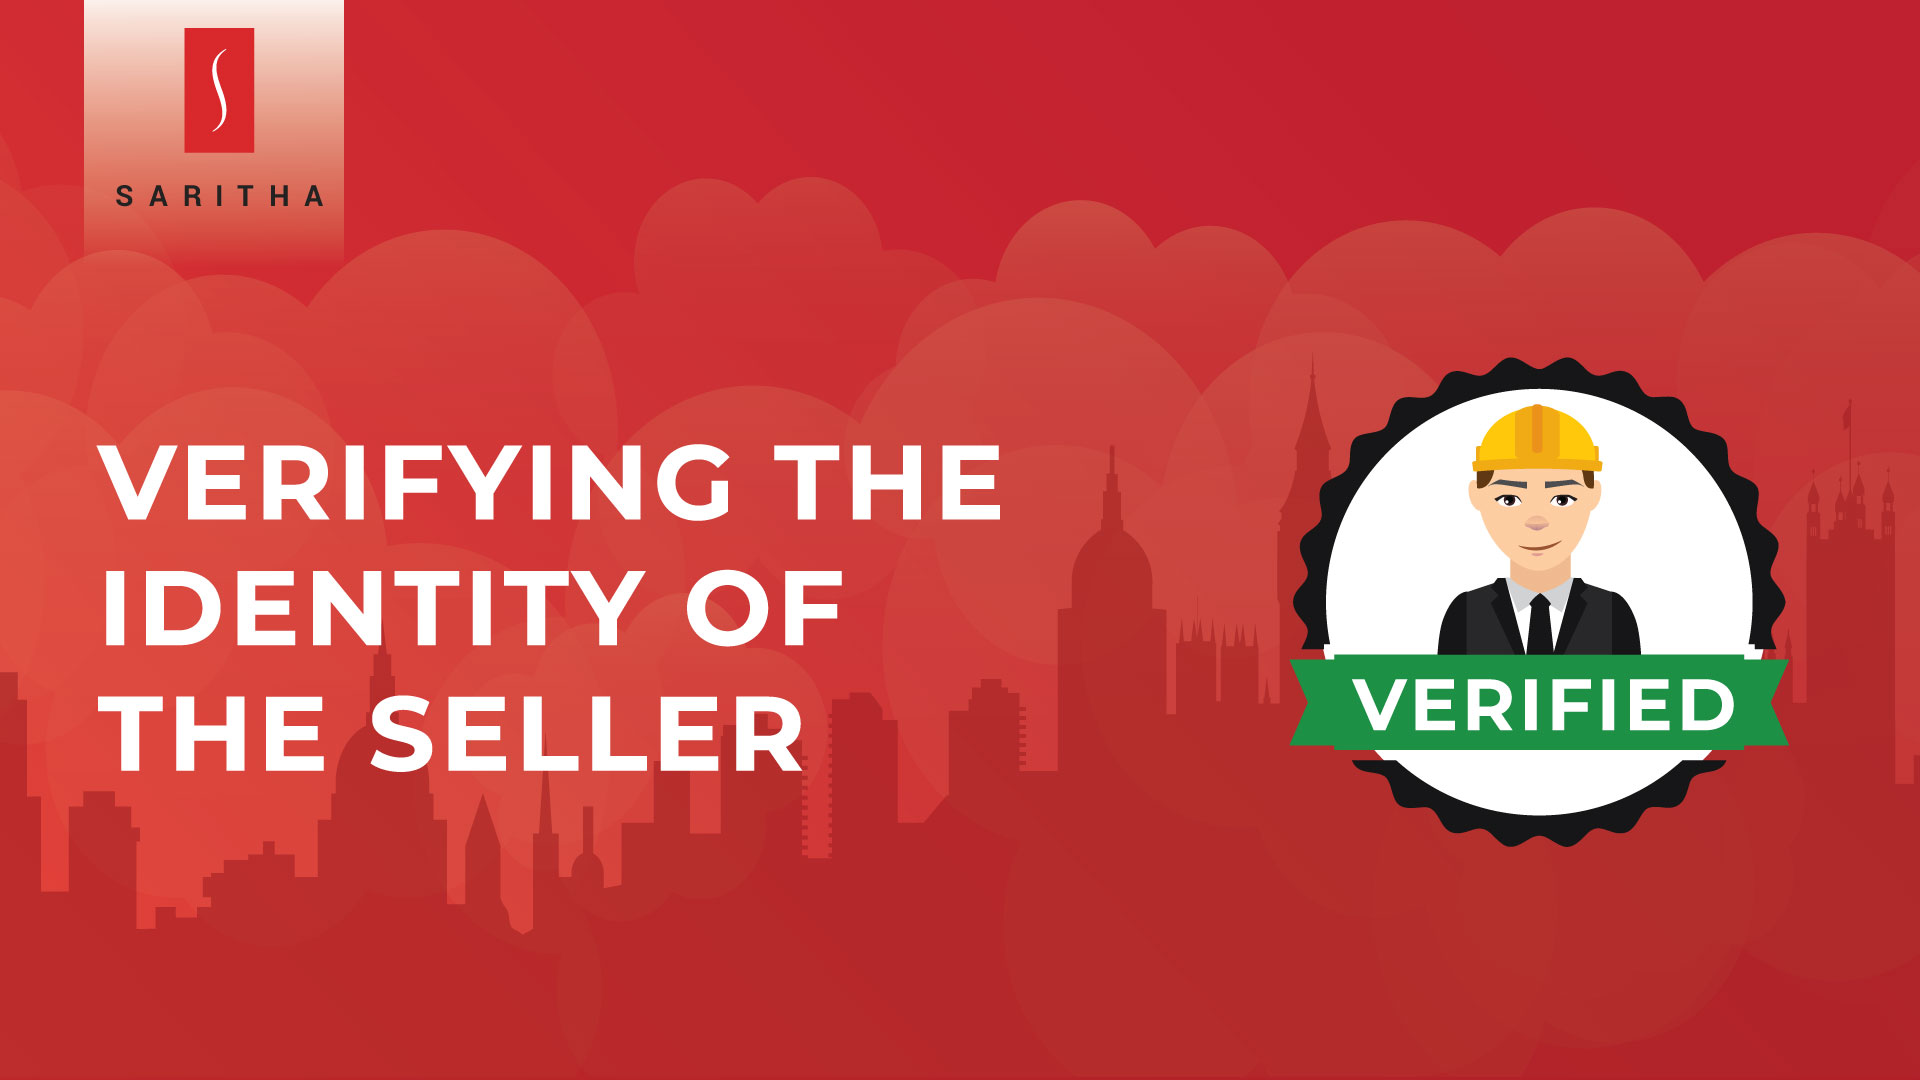 Verifying the identity of seller